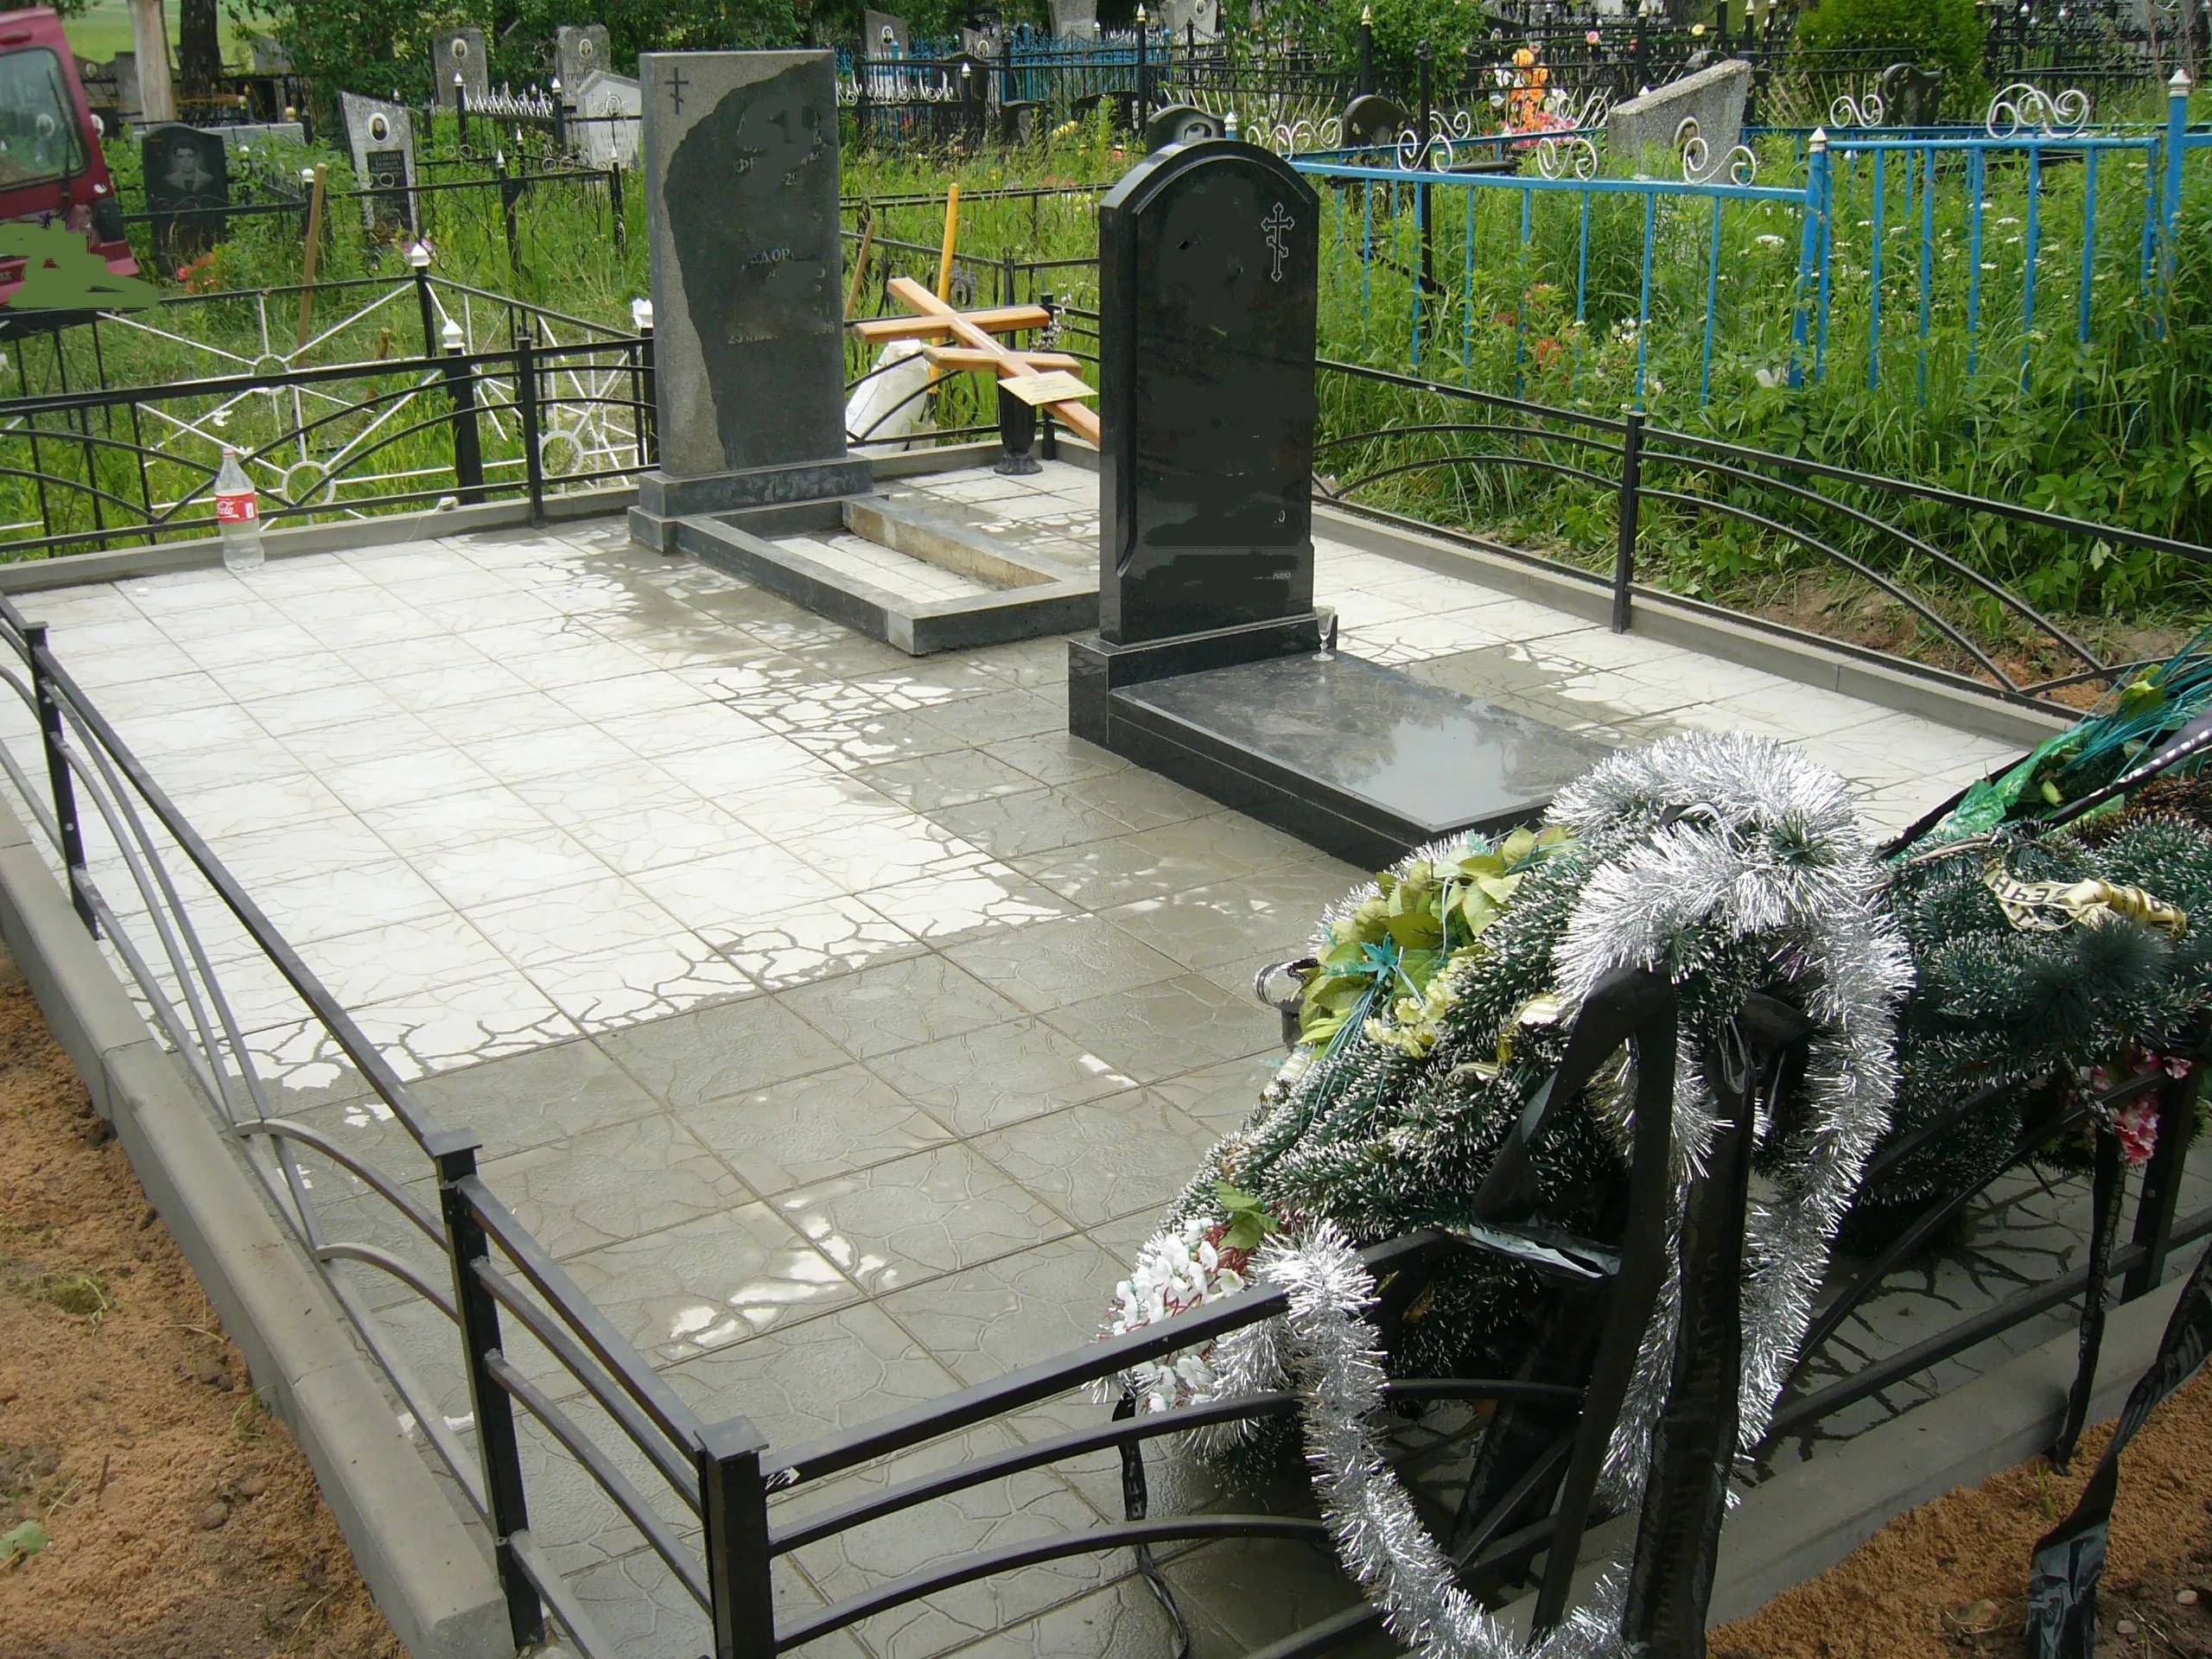 Как красиво обустроить могилу на кладбище, фото примеры - uchieto.ru - как научиться...